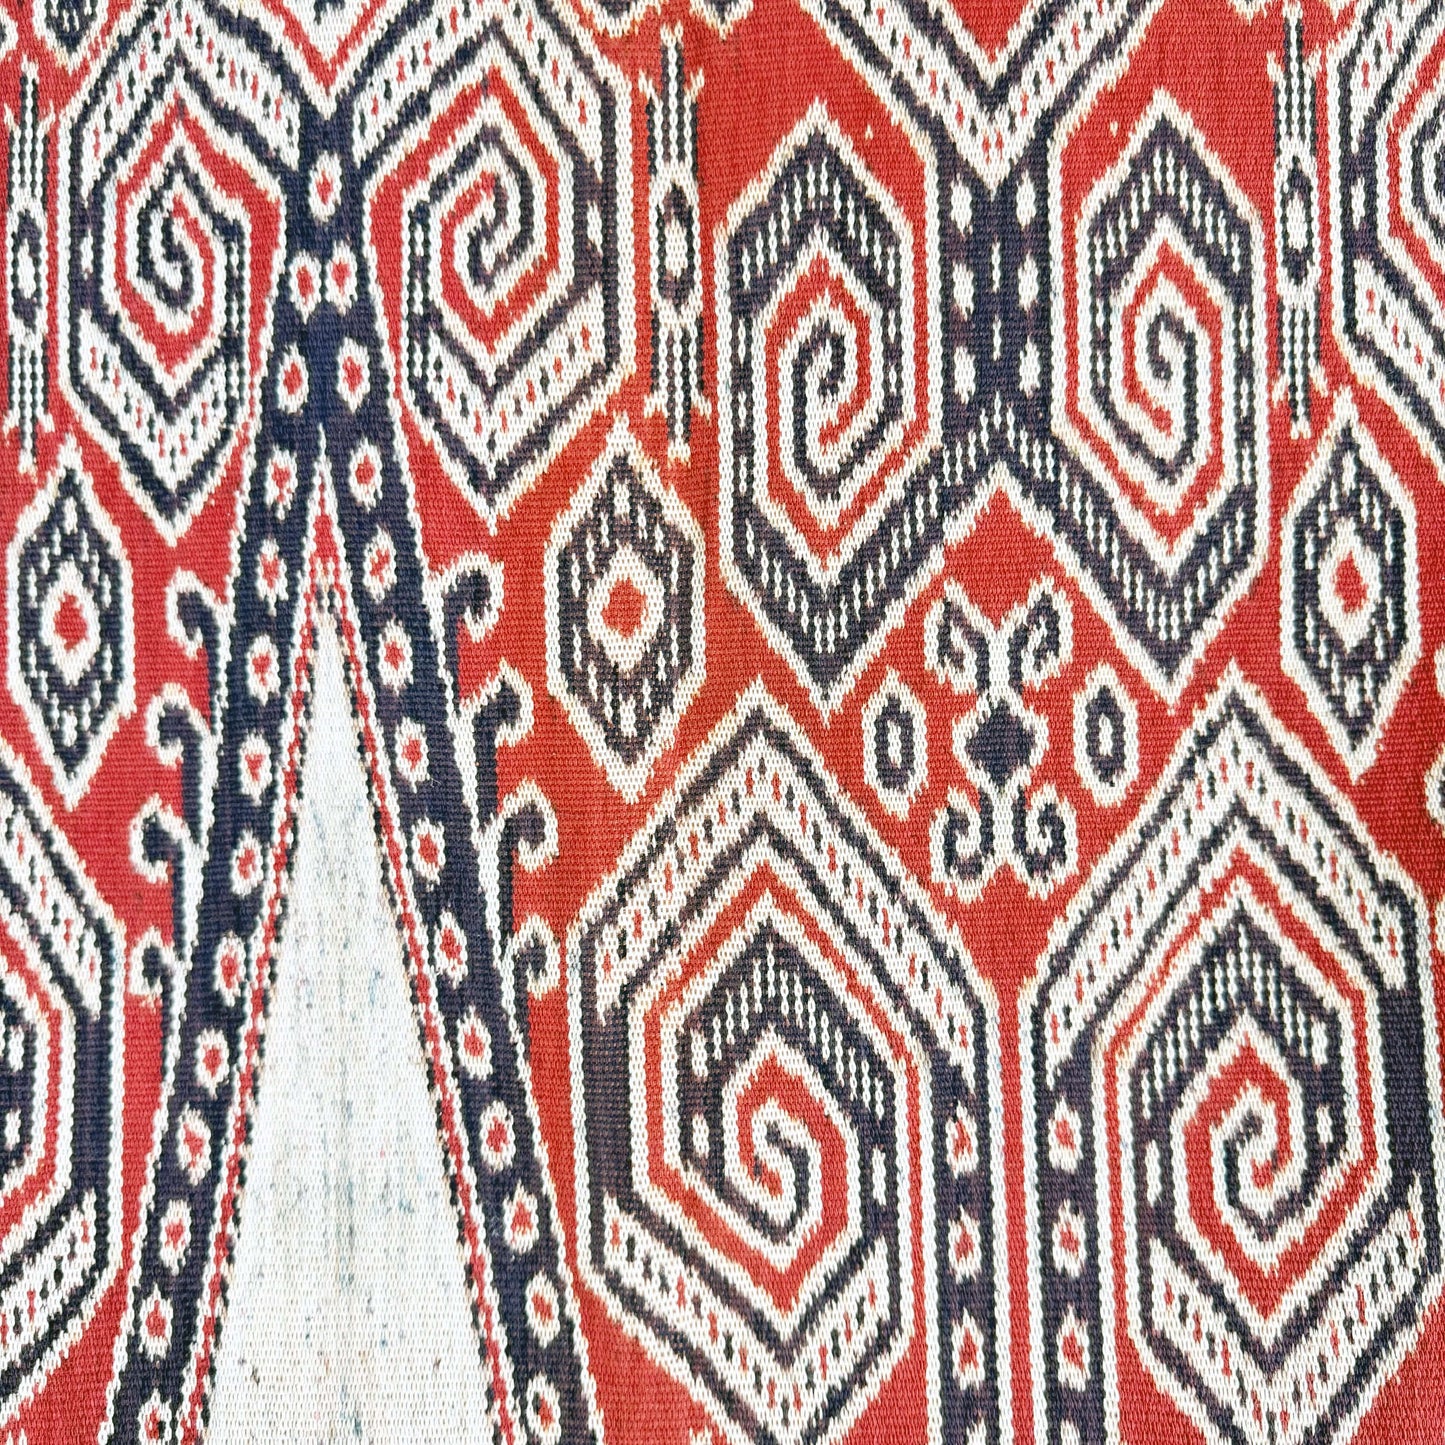 Gumbang Bersimpan Pua Kumbu Ceremonial Textile Art